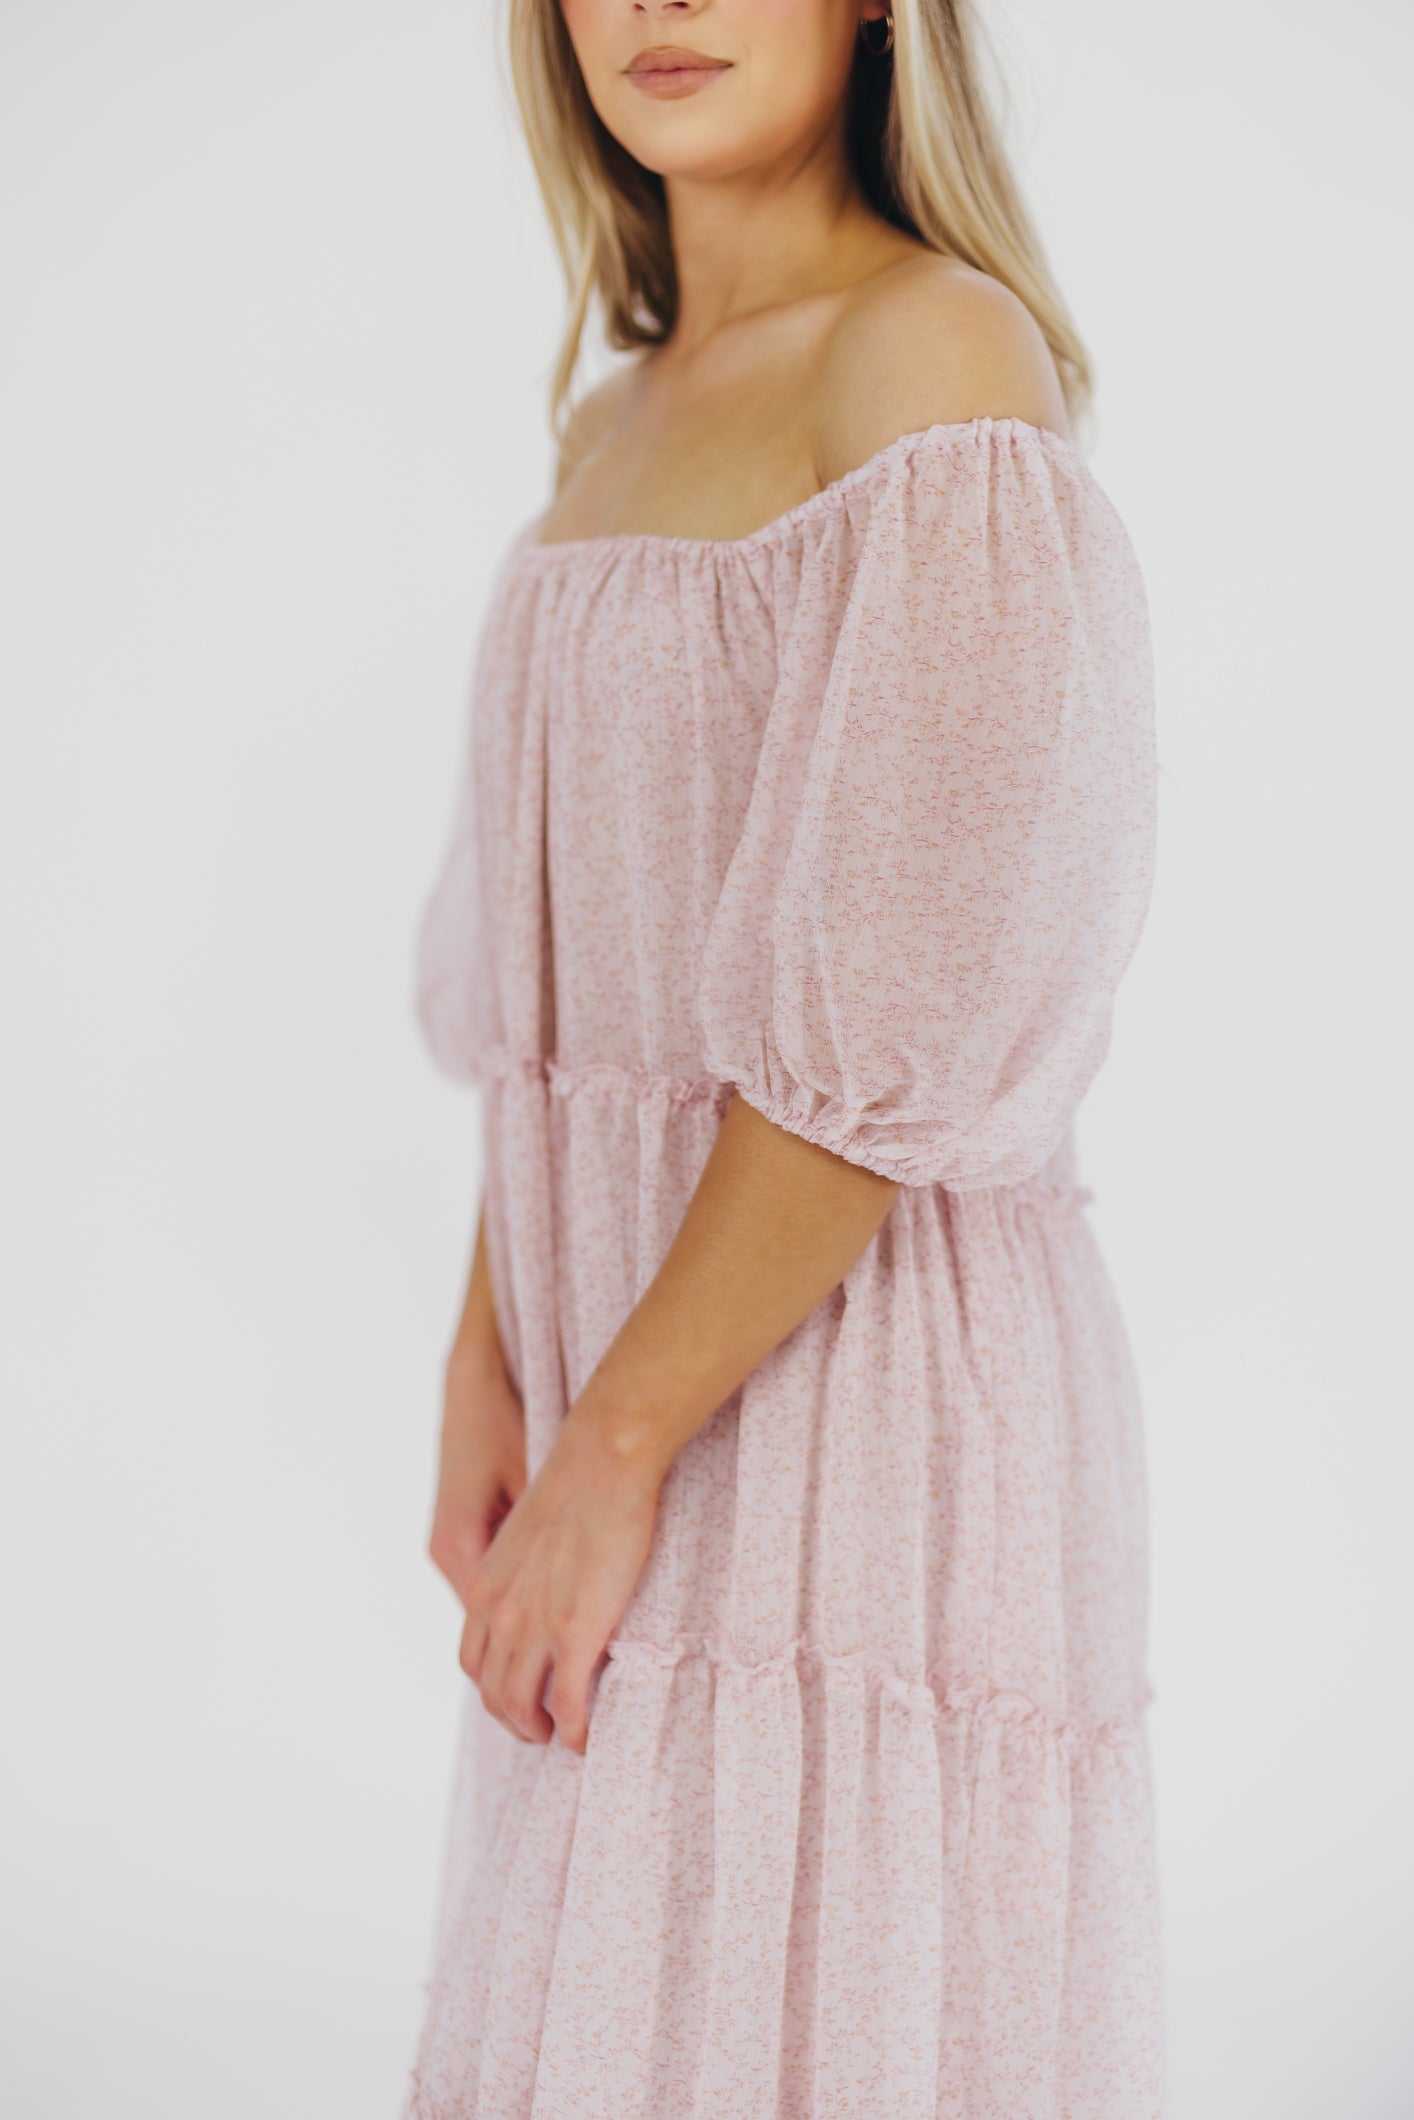 Eva Puffed Sleeve Maxi Dress in Light Pink Multi - Bump Friendly & Inclusive Sizing (S-3XL)